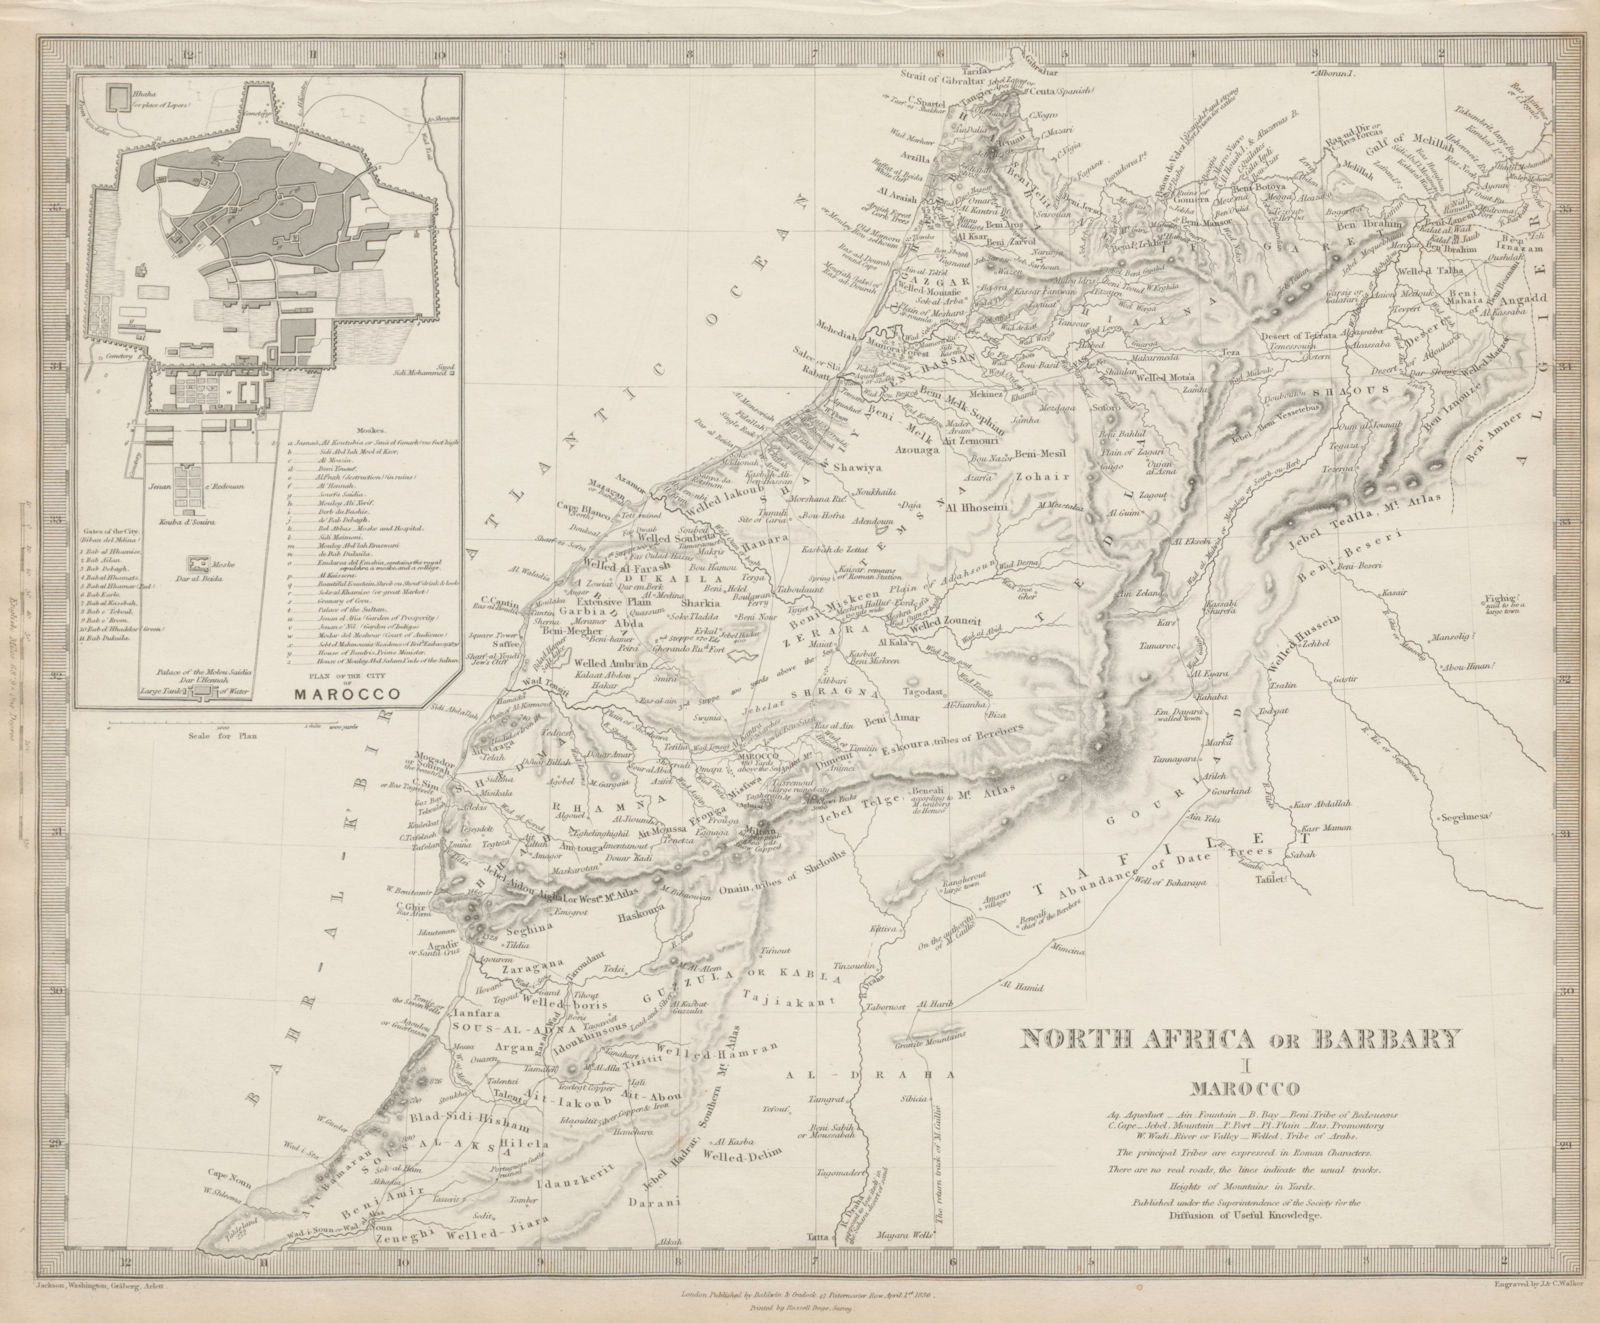 MOROCCO Marocco 'North Africa or Barbary'. Marrakech city plan. SDUK 1844 map